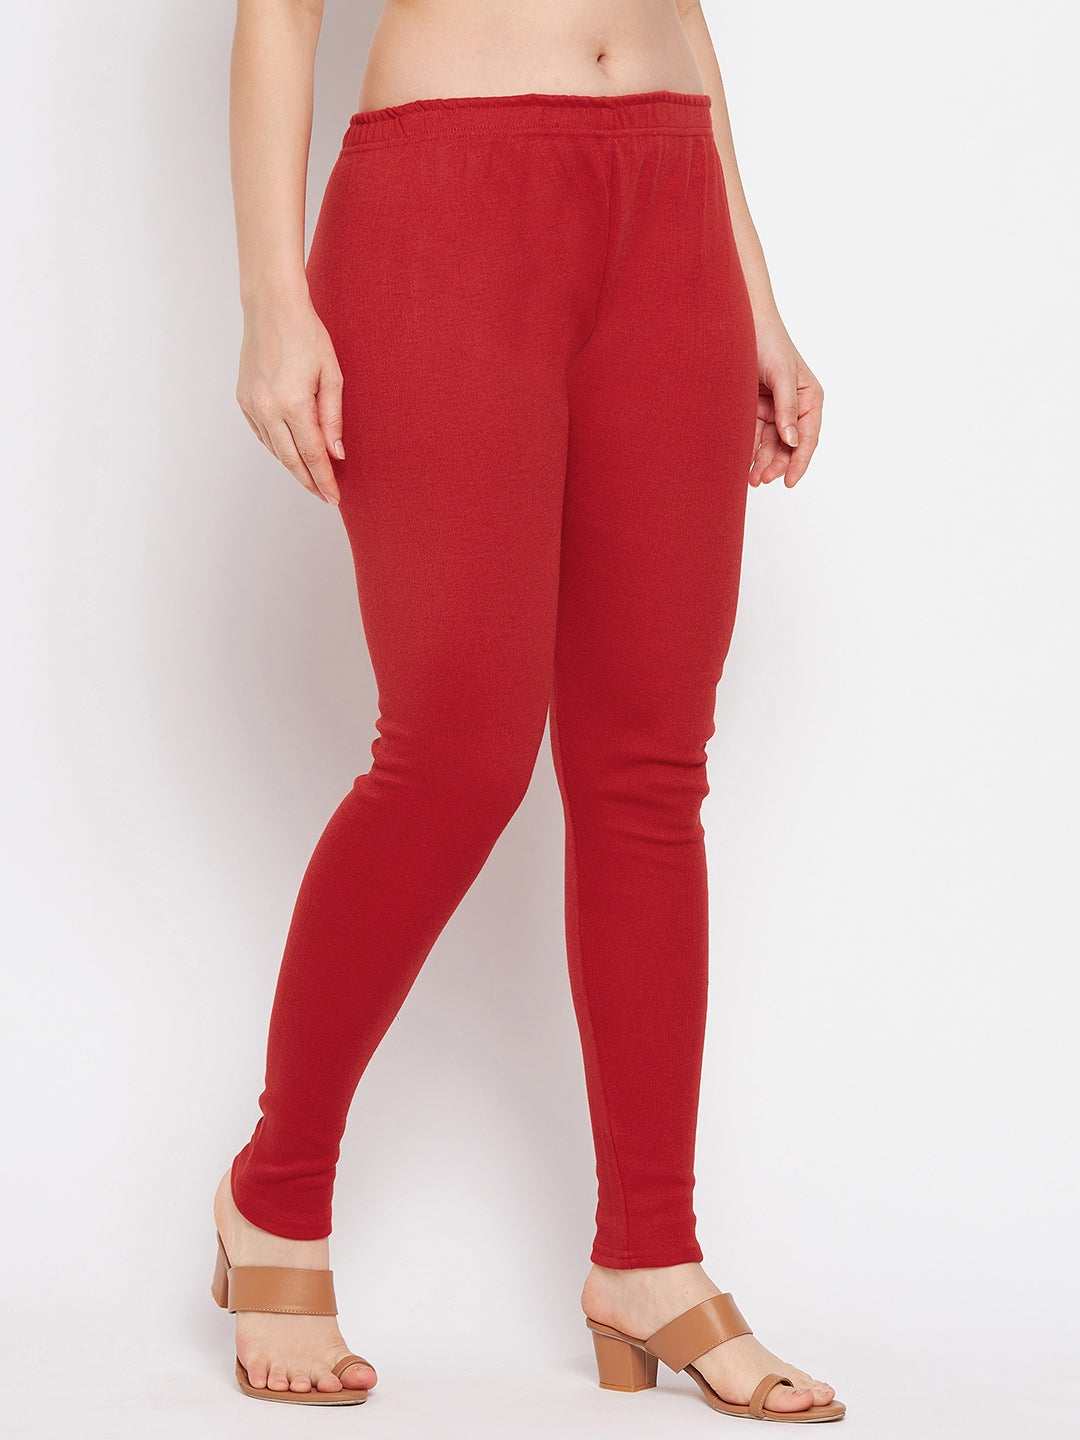 Buy Lyra Women Solid Premium Cotton Churidar Leggings | Mid-Waist |  Fashionwear at Amazon.in